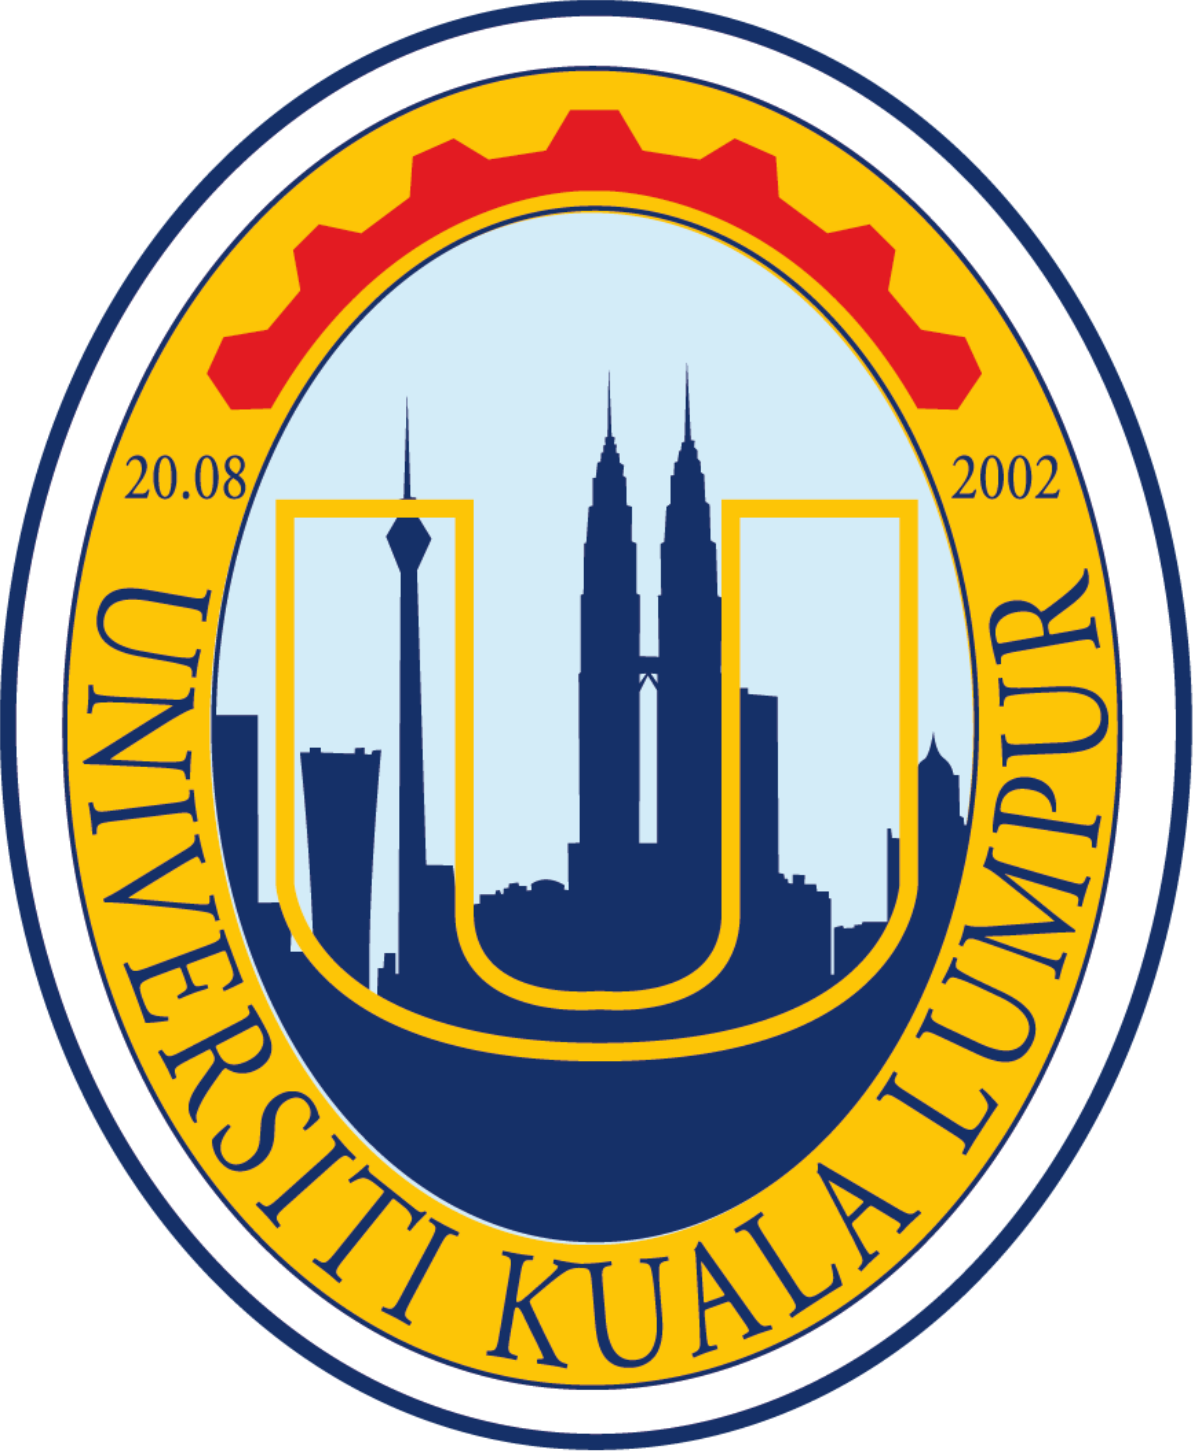 Unikl University of